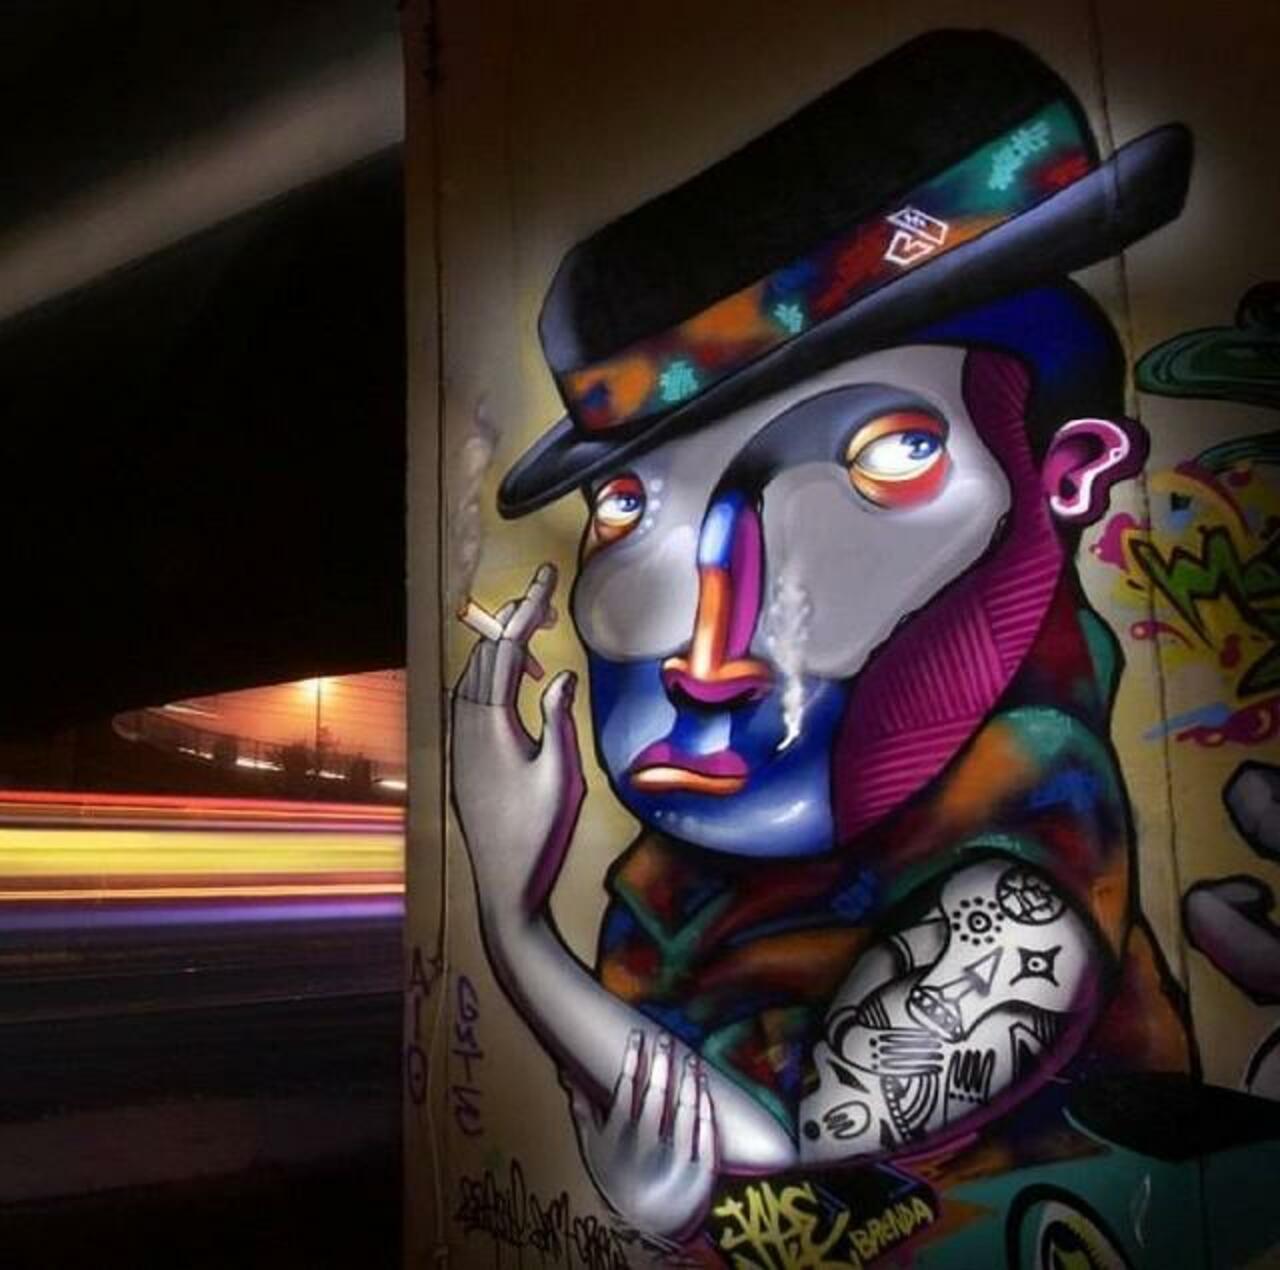 “@GoogleStreetArt: Abstract Street Art by Jade Rivera 

#art #mural #graffiti #streetart http://t.co/VoXWnbnRfa” @cabellosazules